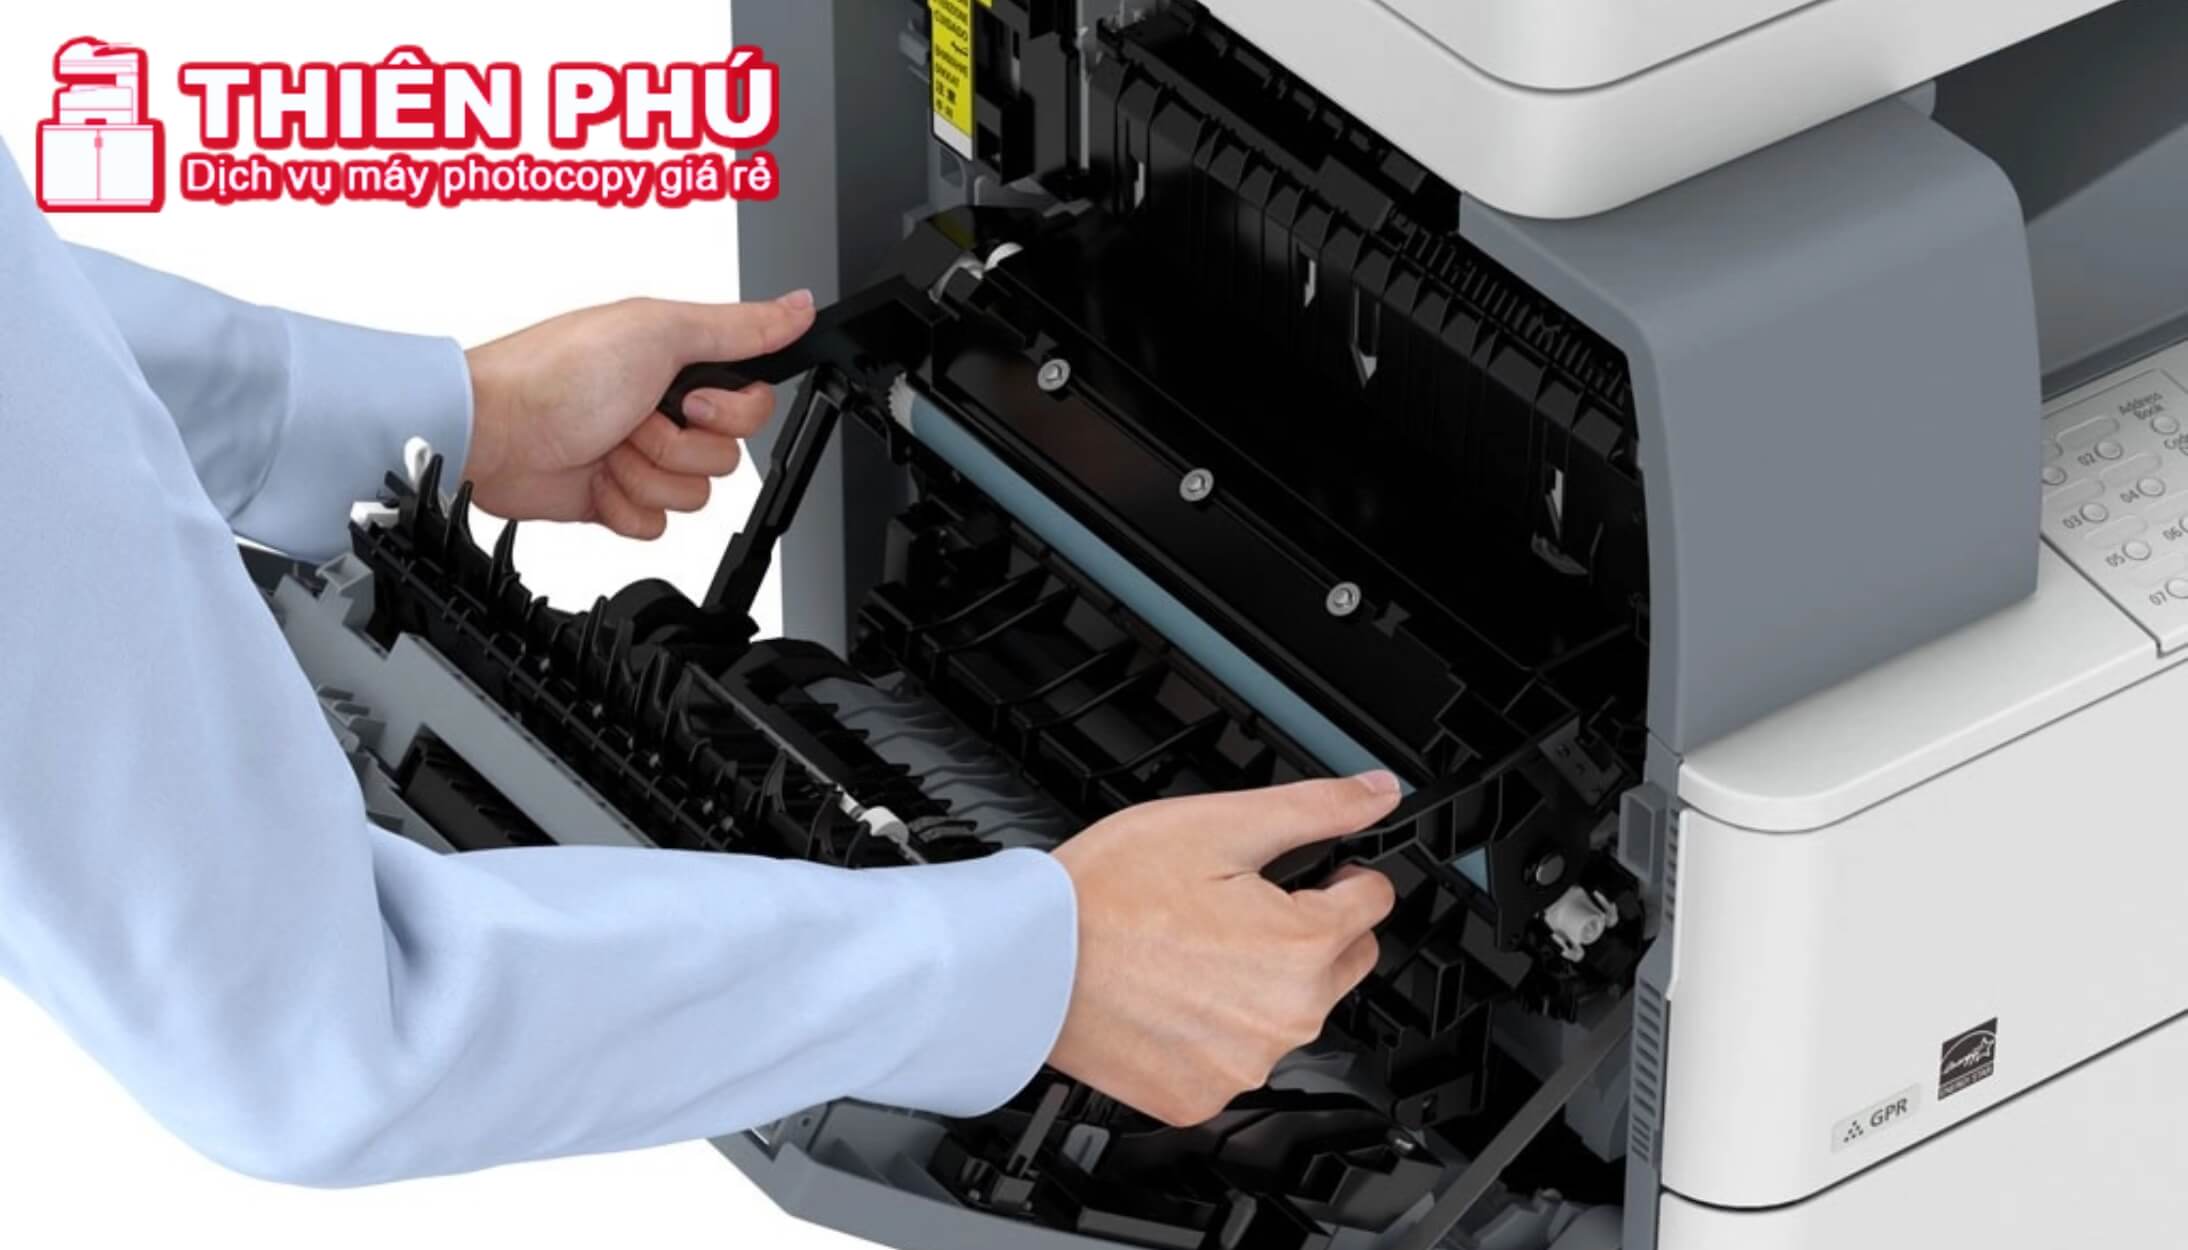 Bảo dưỡng máy photocopy theo định kỳ